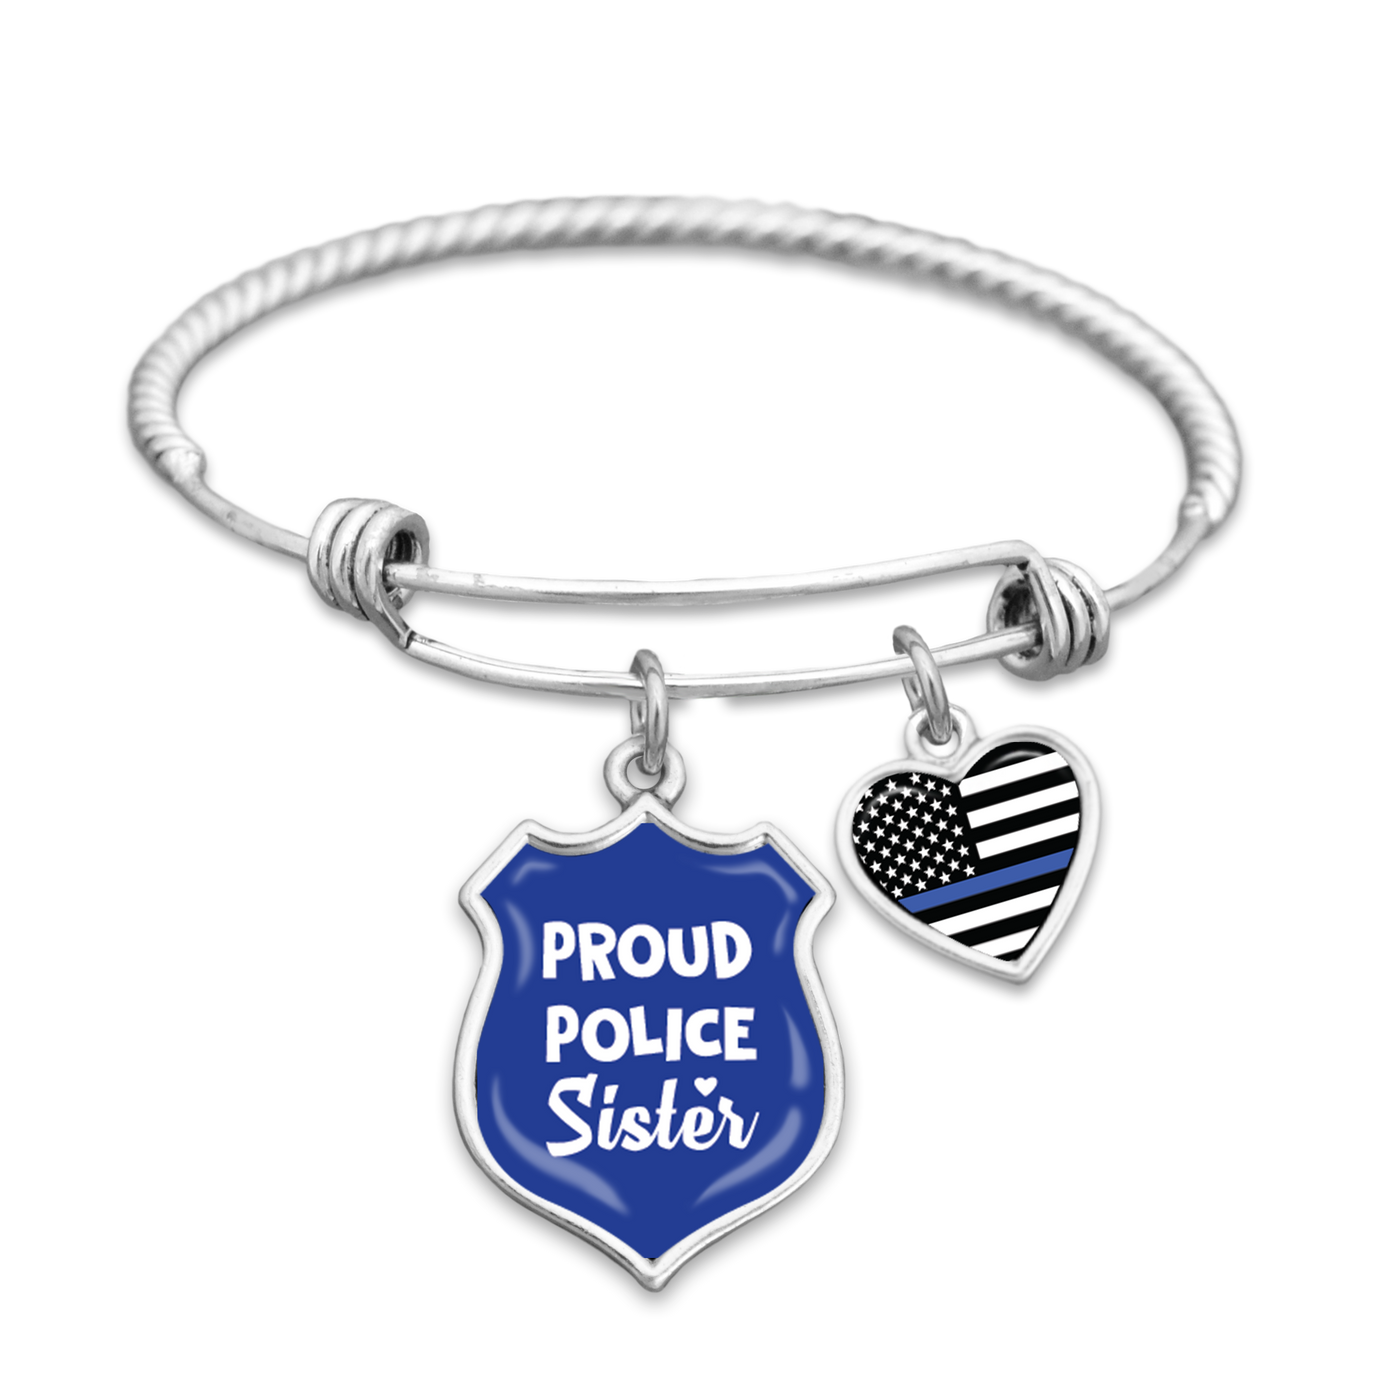 Proud Police Sister Charm Bracelet